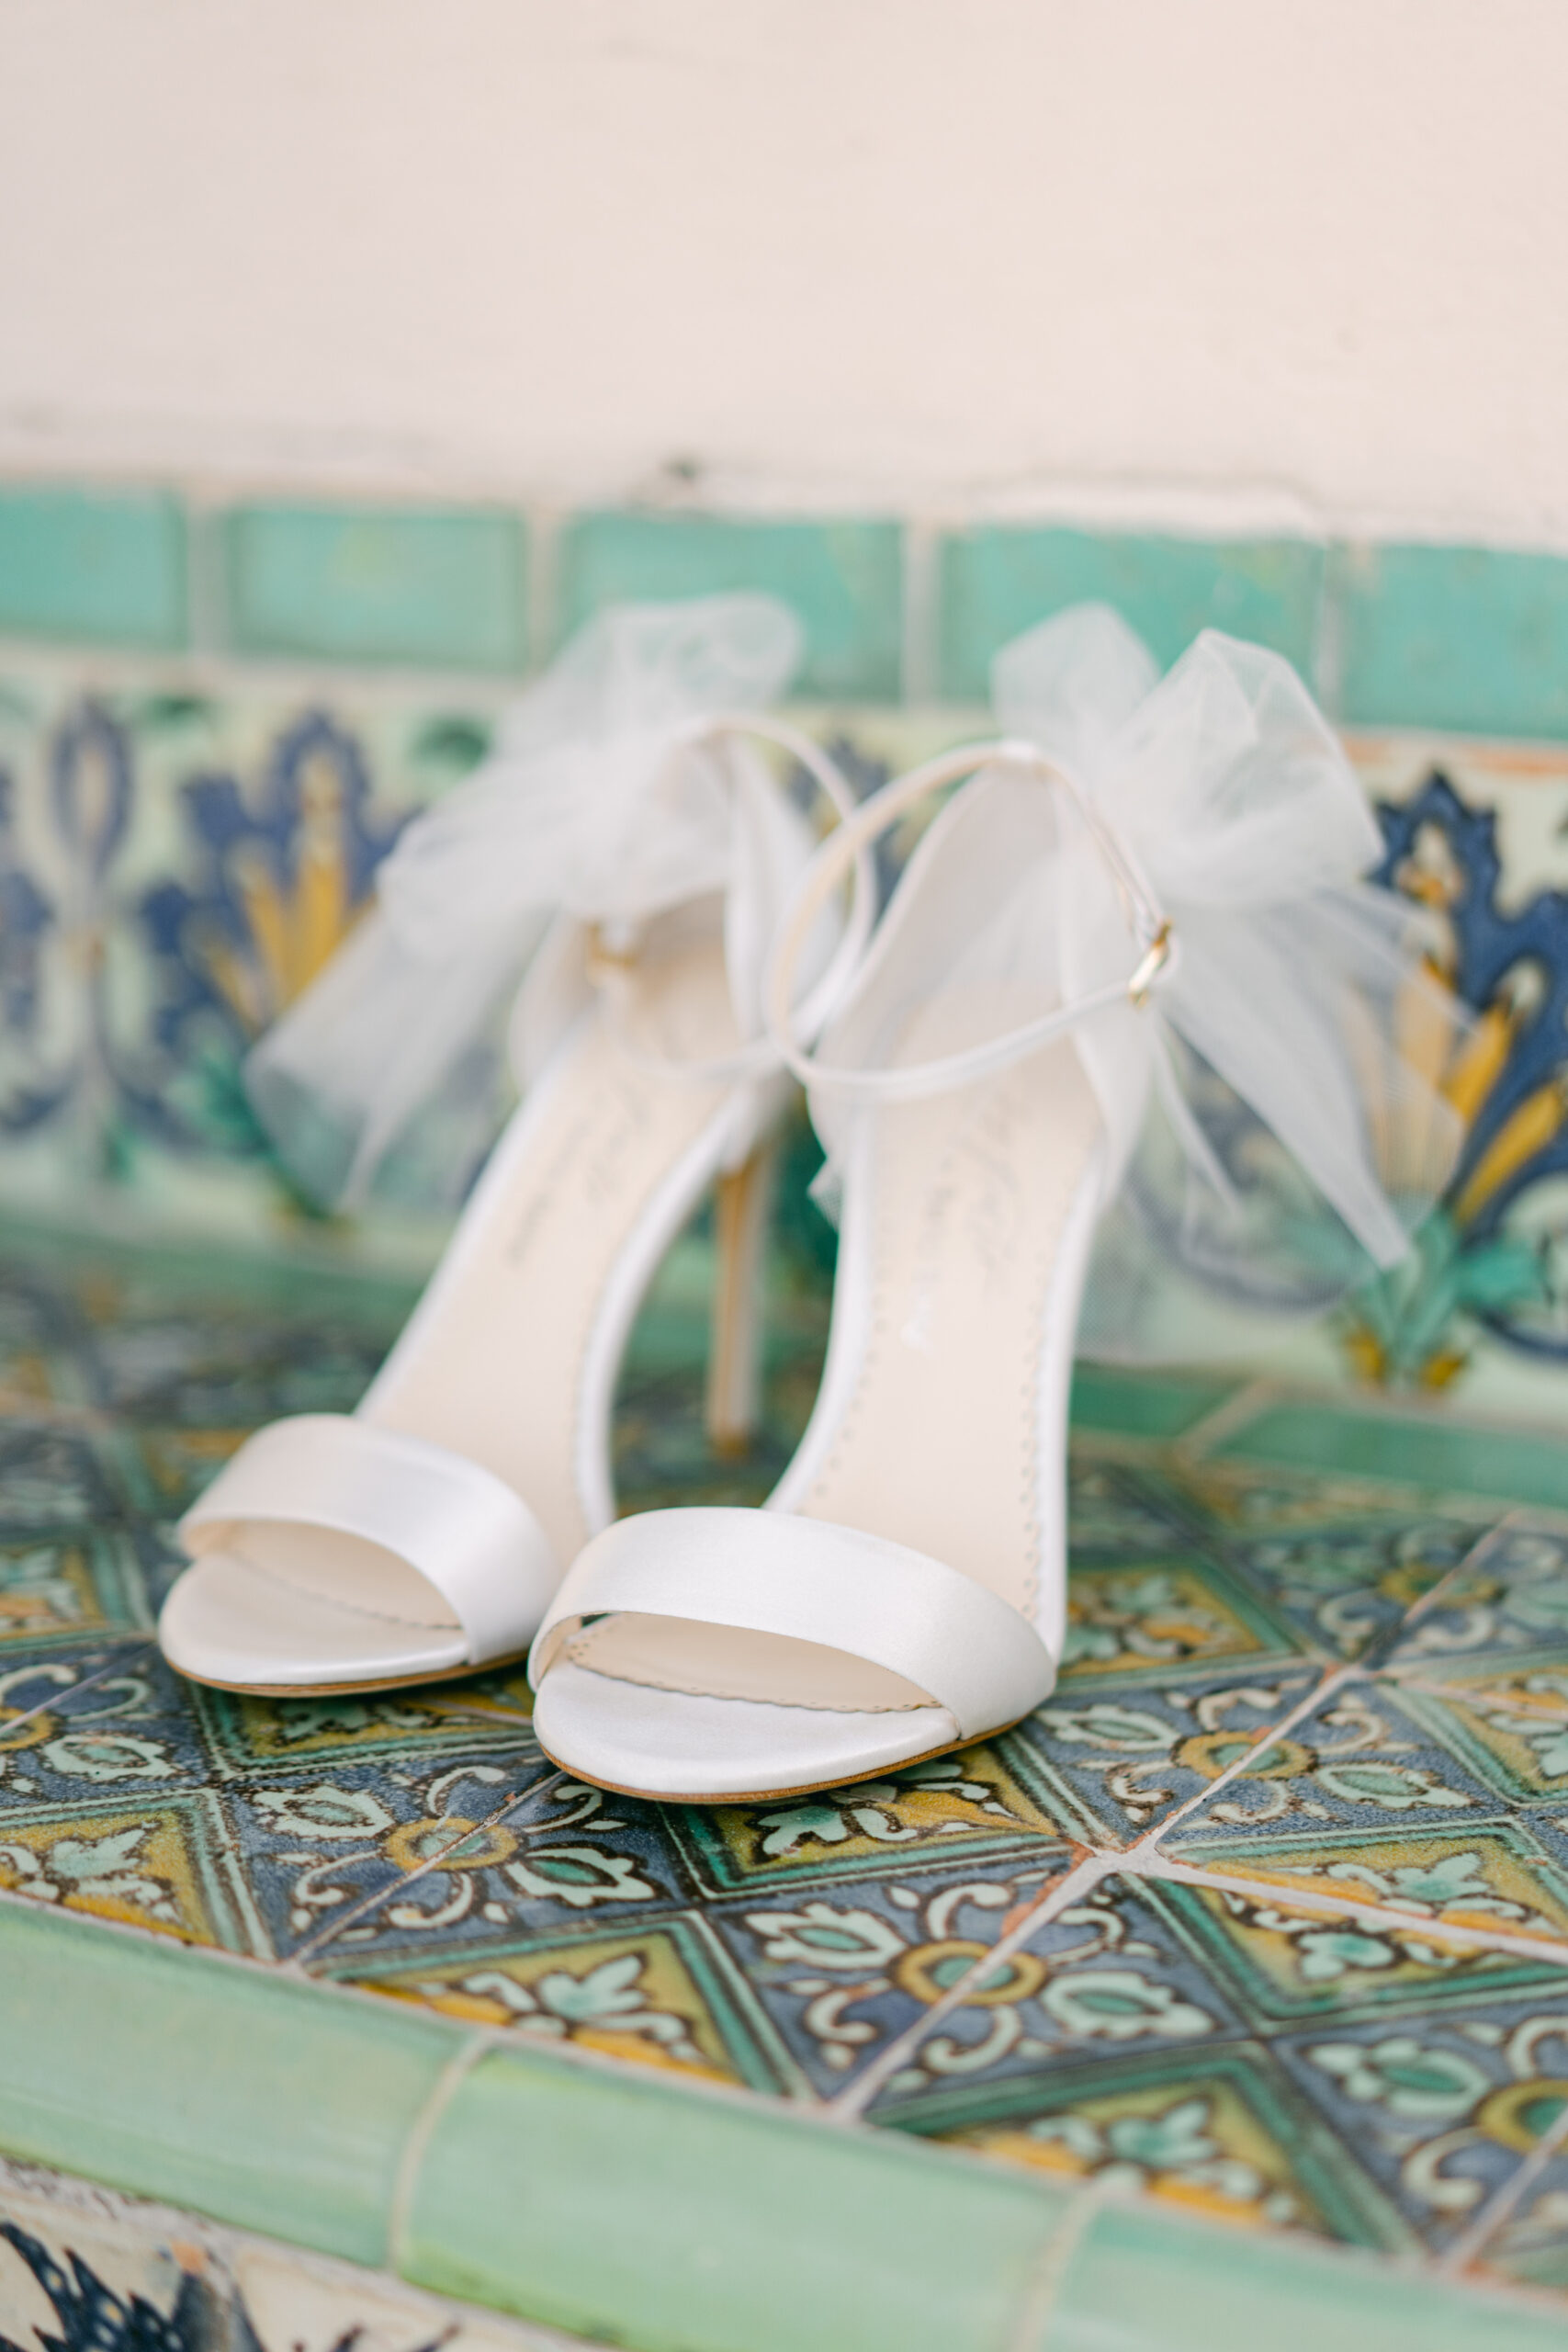 wedding shoes at biltmore hotel miami